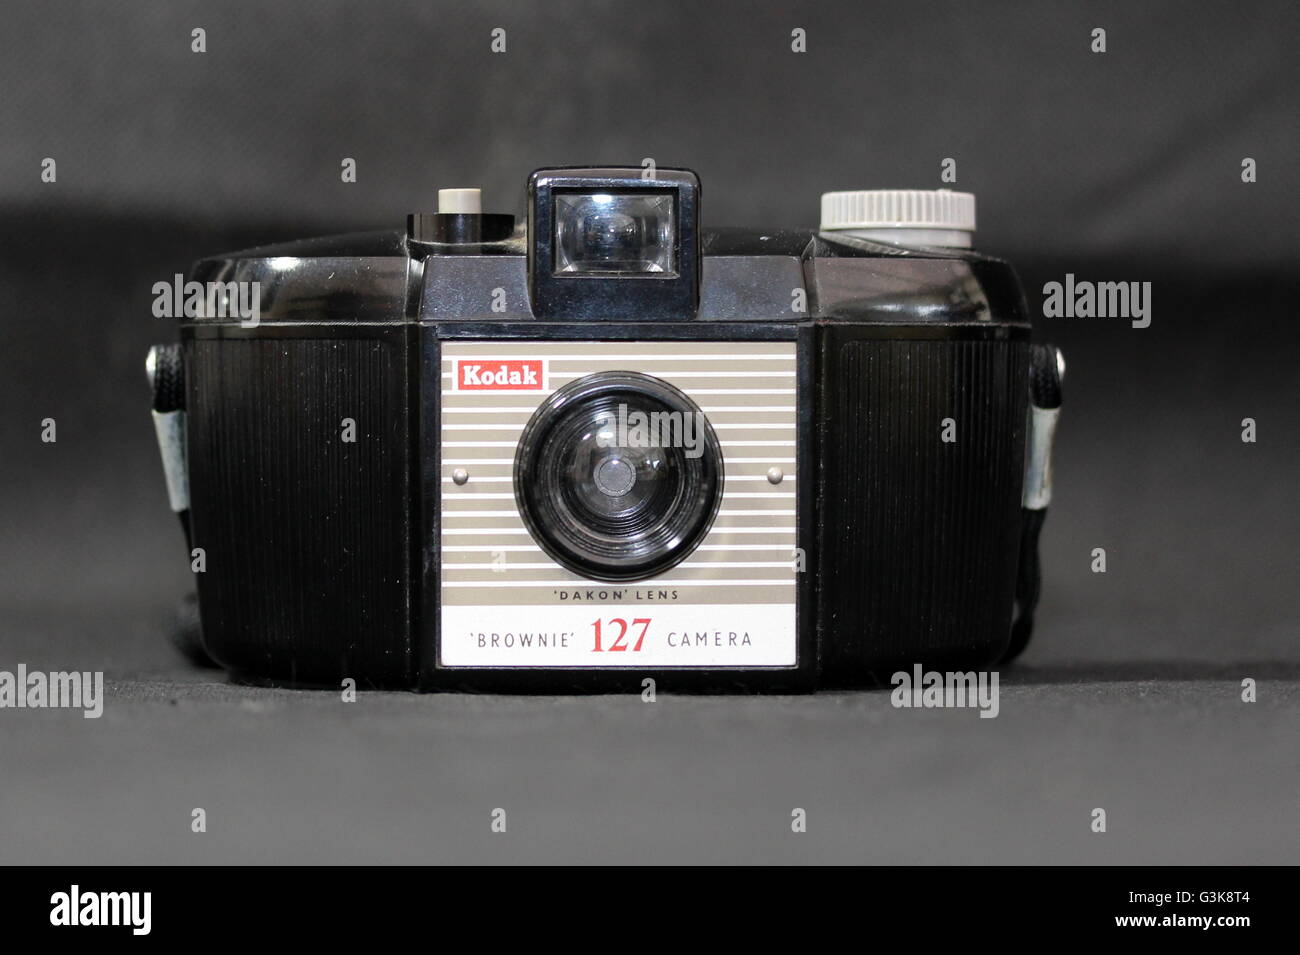 Kodak Brownie 127 Camera Stock Photo